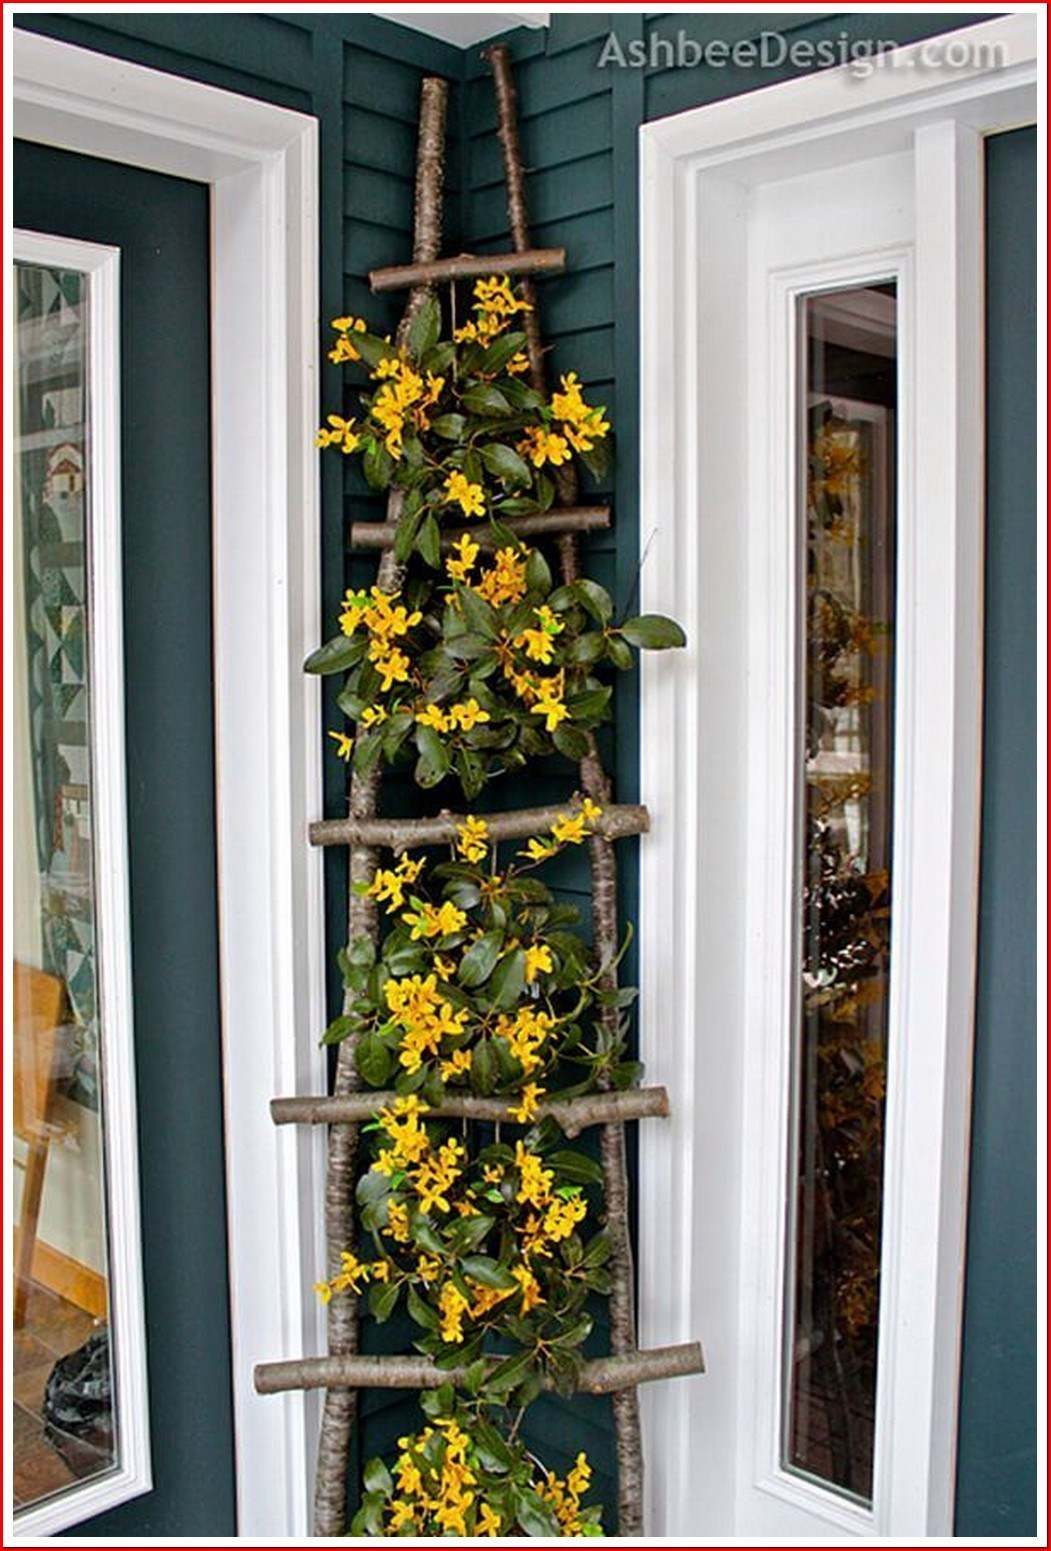 Diy trellis ladder Functional DIY Trellis Ideas To Beautify Your Garden In Style